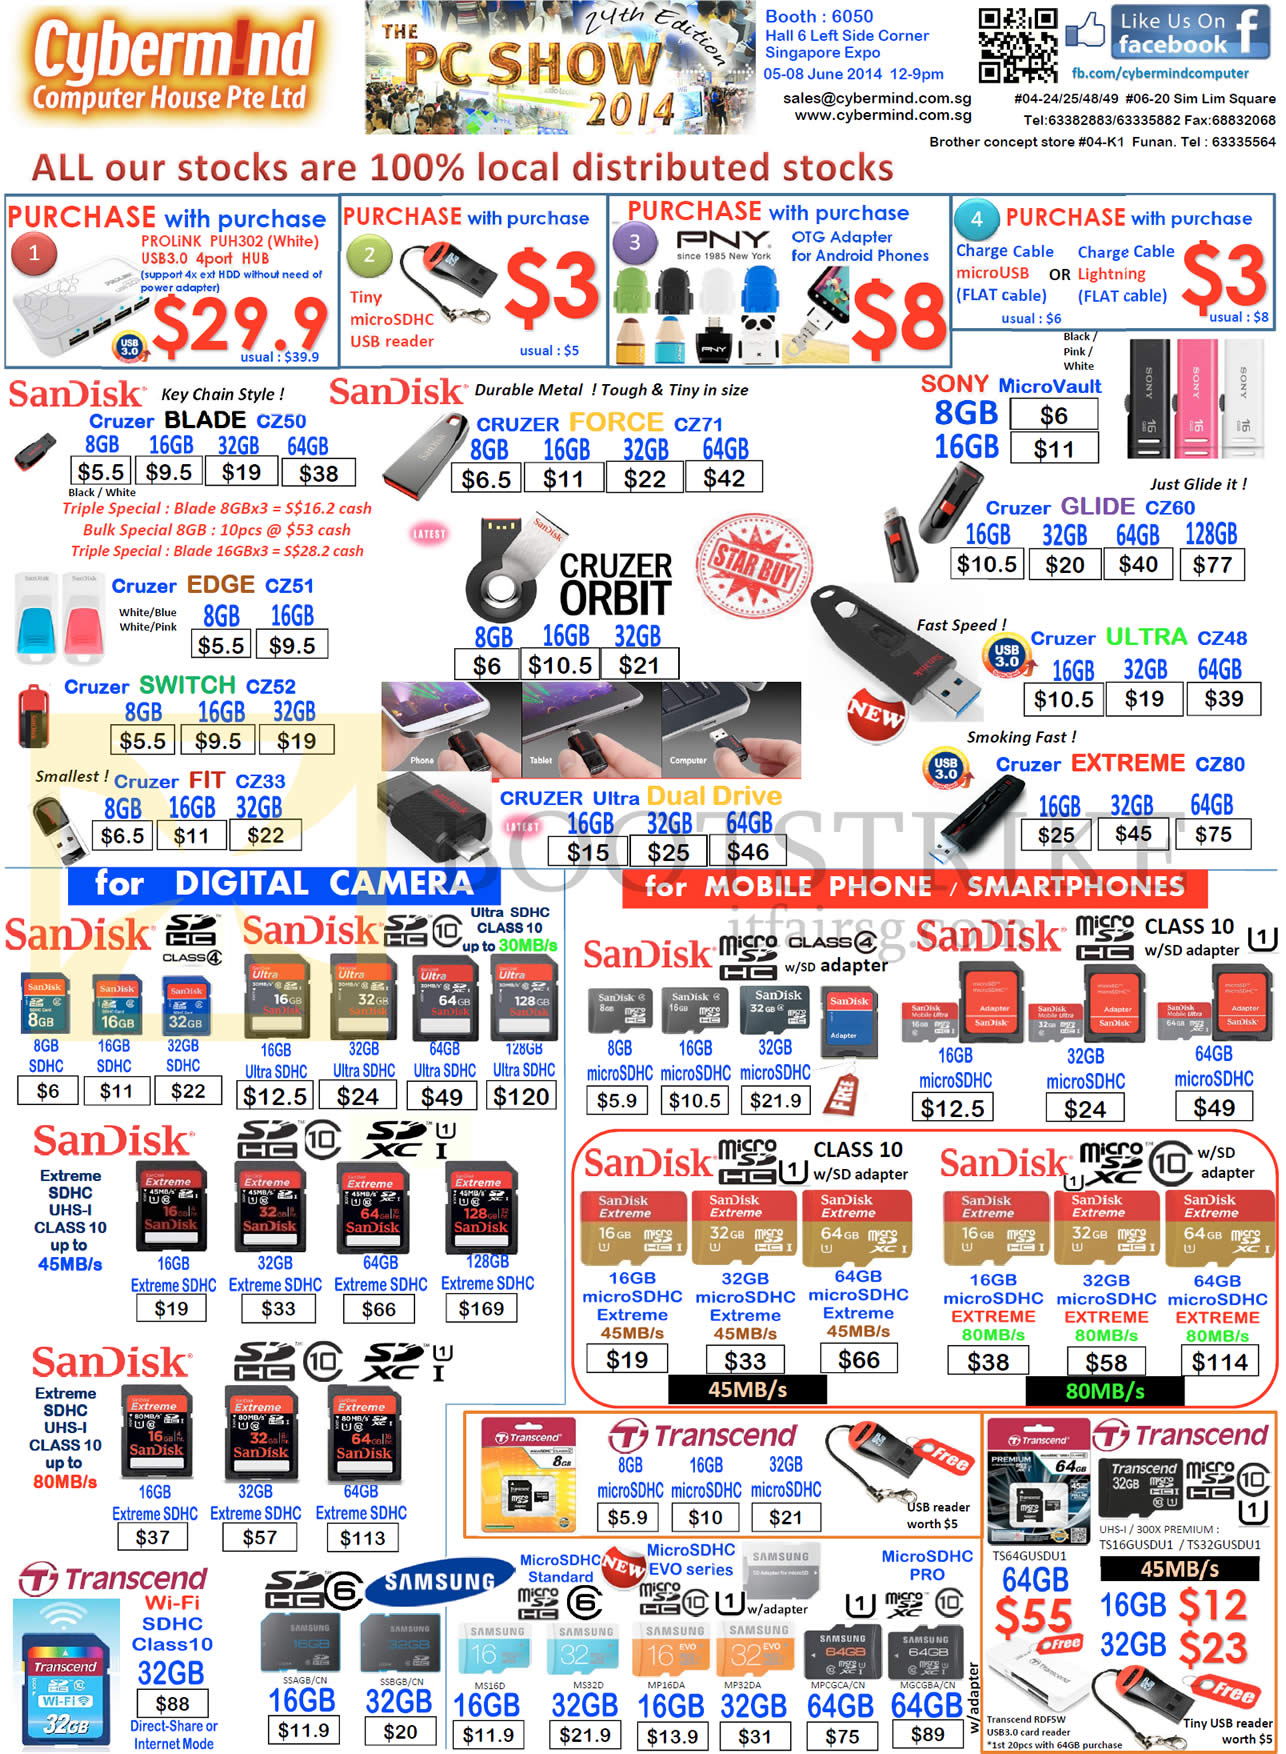 PC SHOW 2014 price list image brochure of Cybermind Flash Memory USB, Sandisk, Transcend, Samsung, Sony, Cruzer, SD, MicroSDHC, Flash Drives